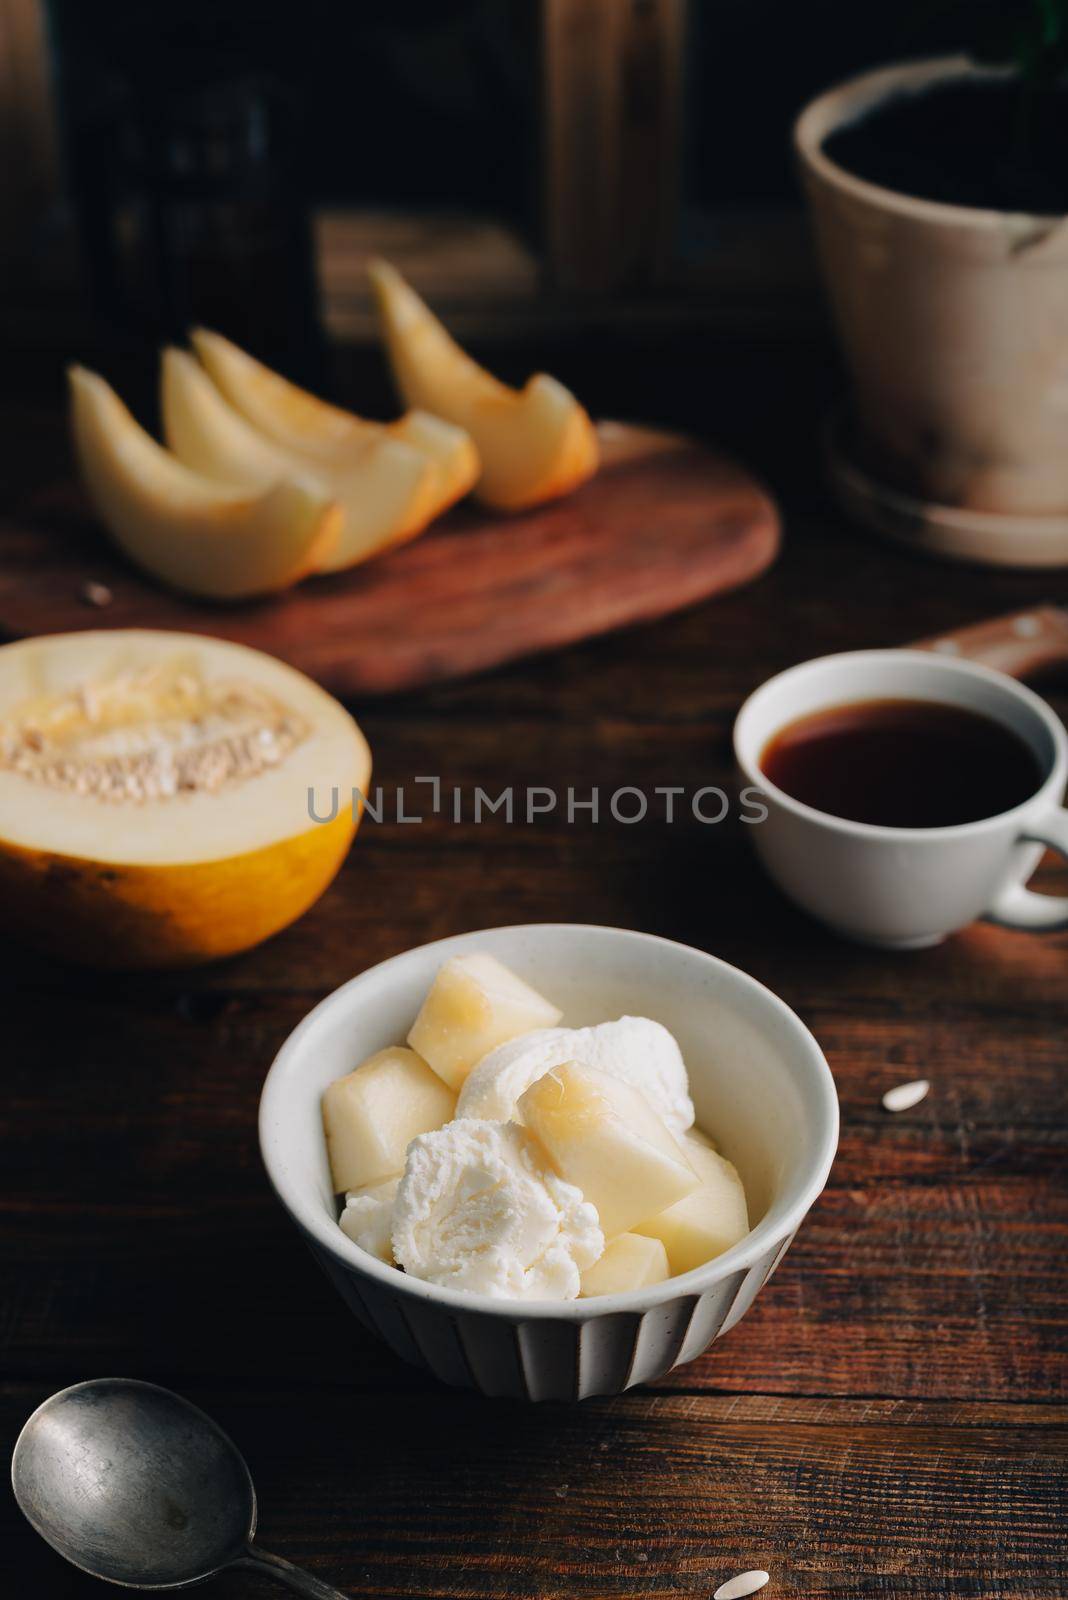 Vanilla Ice Cream with Honeydew Melon Slices in Bowl